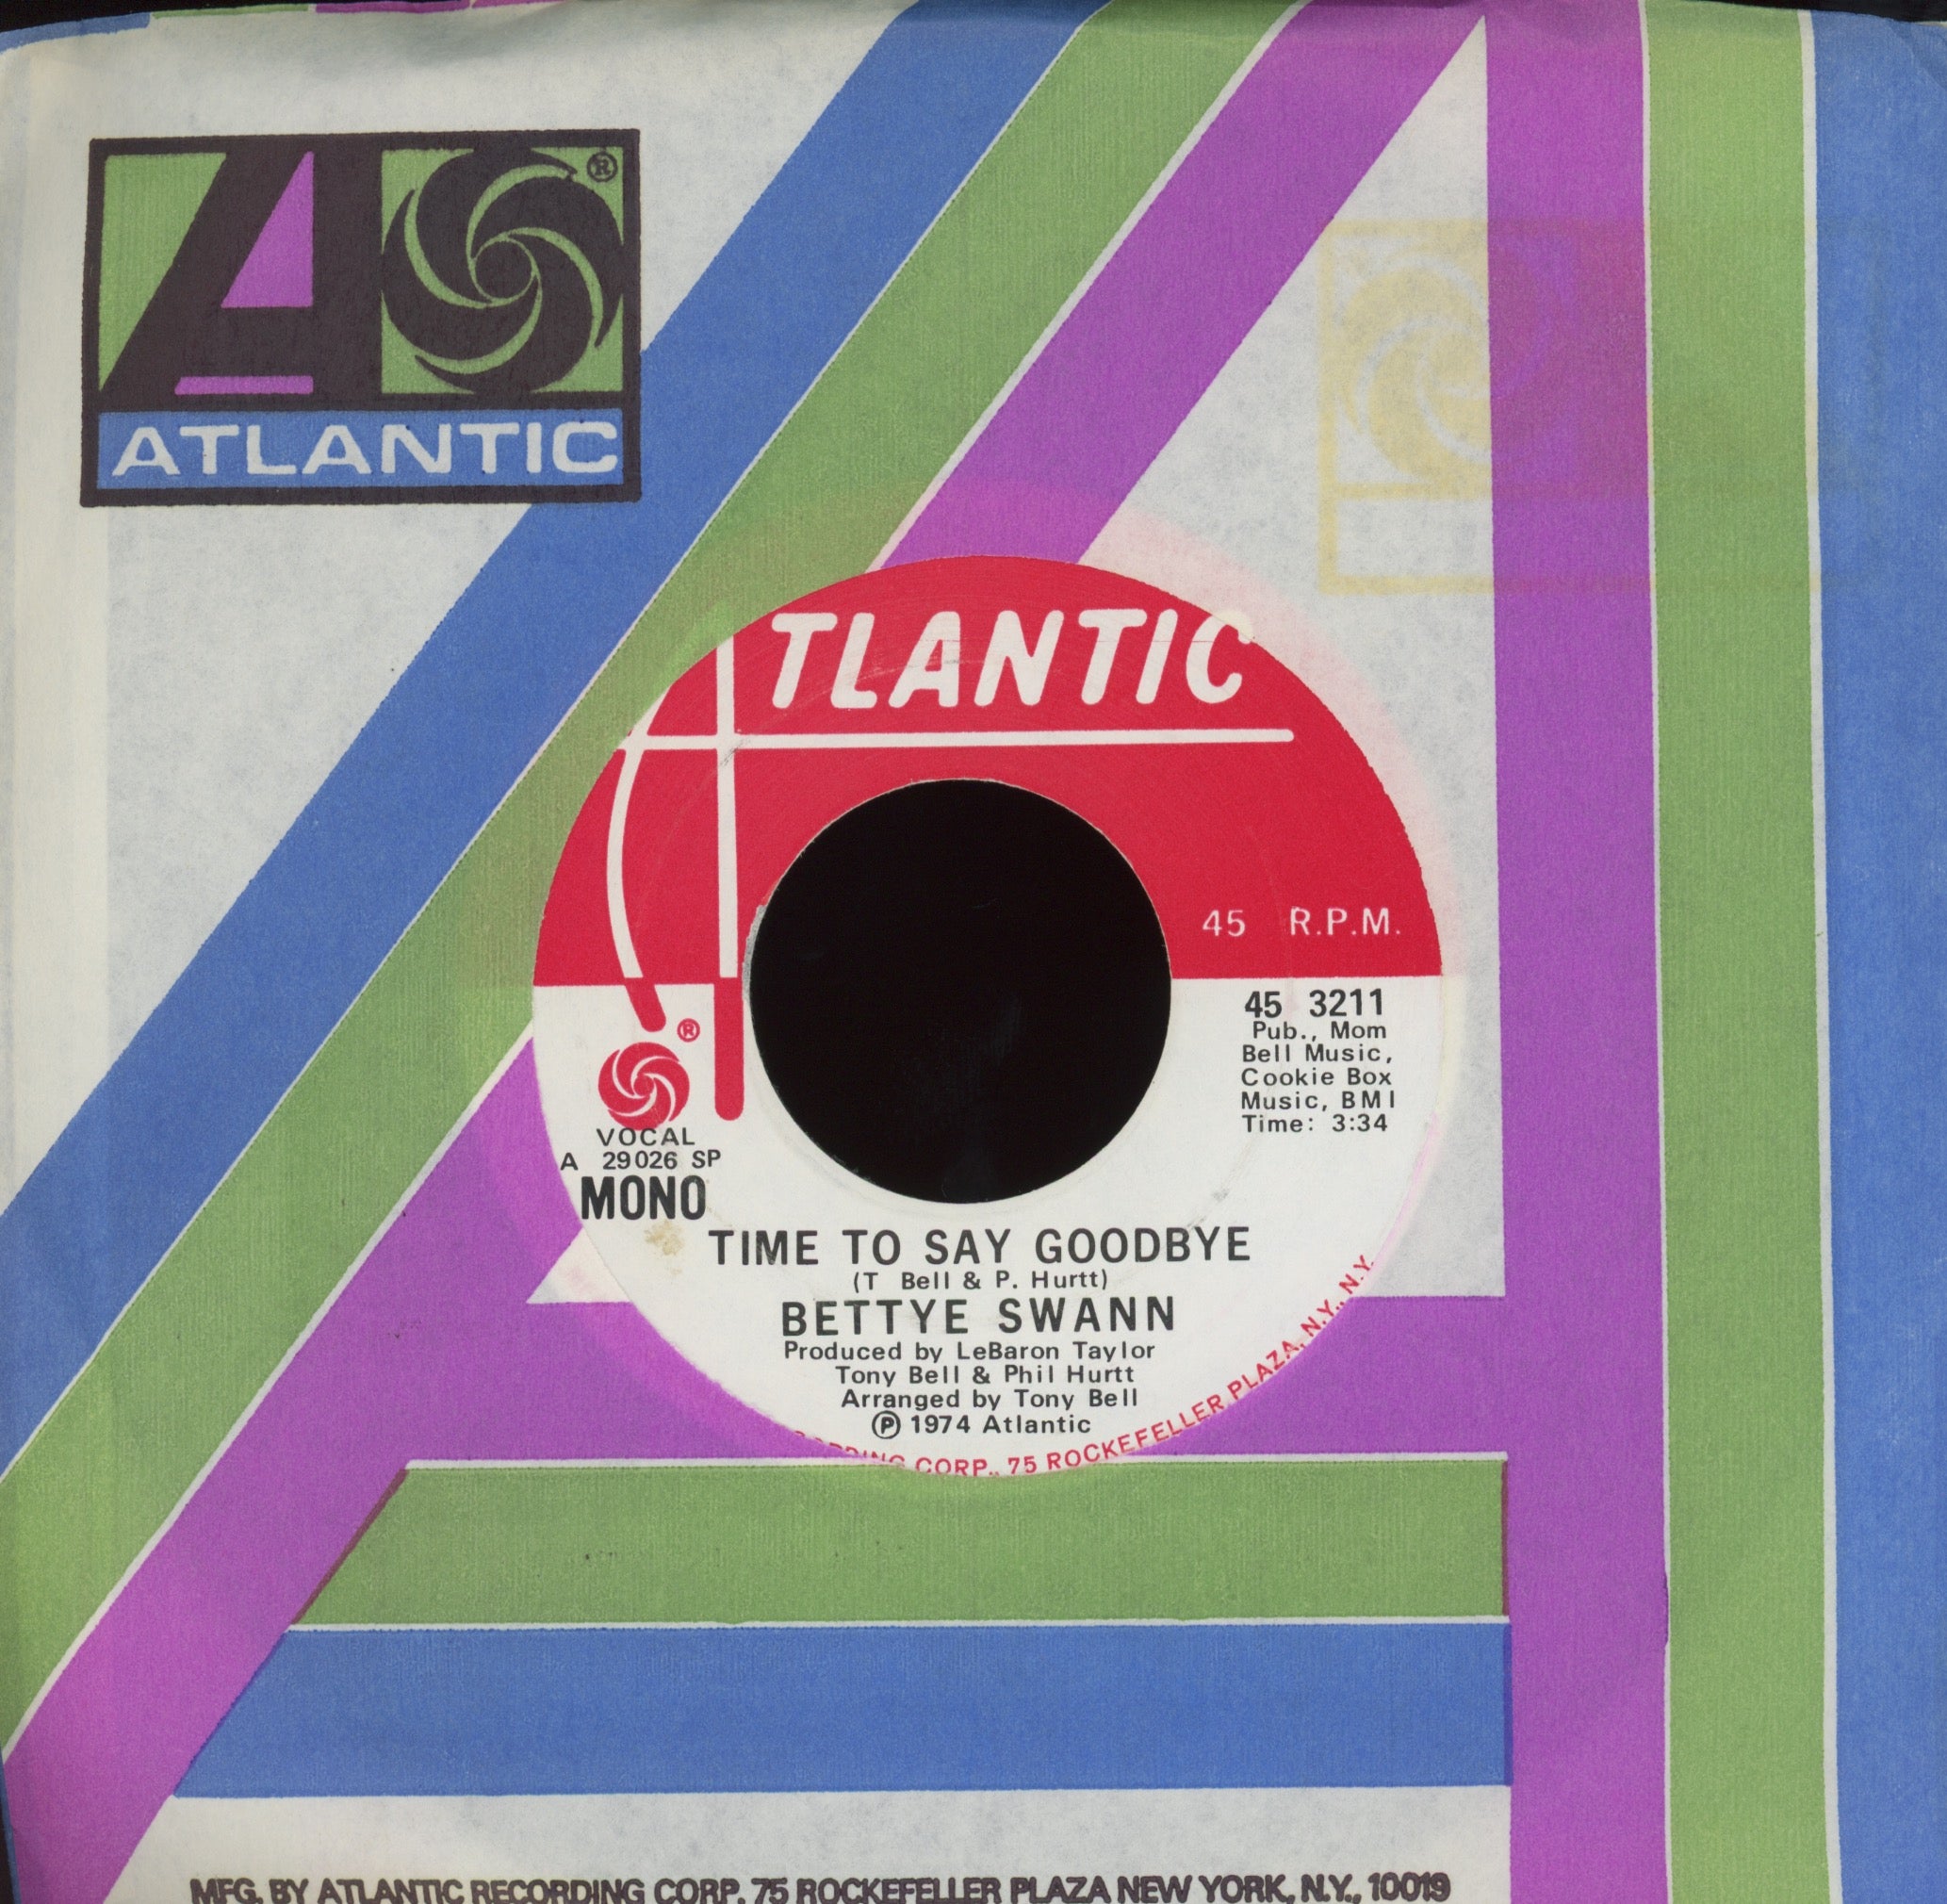 Bettye Swann - Time To Say Goodbye on Atlantic Mono Stereo Promo